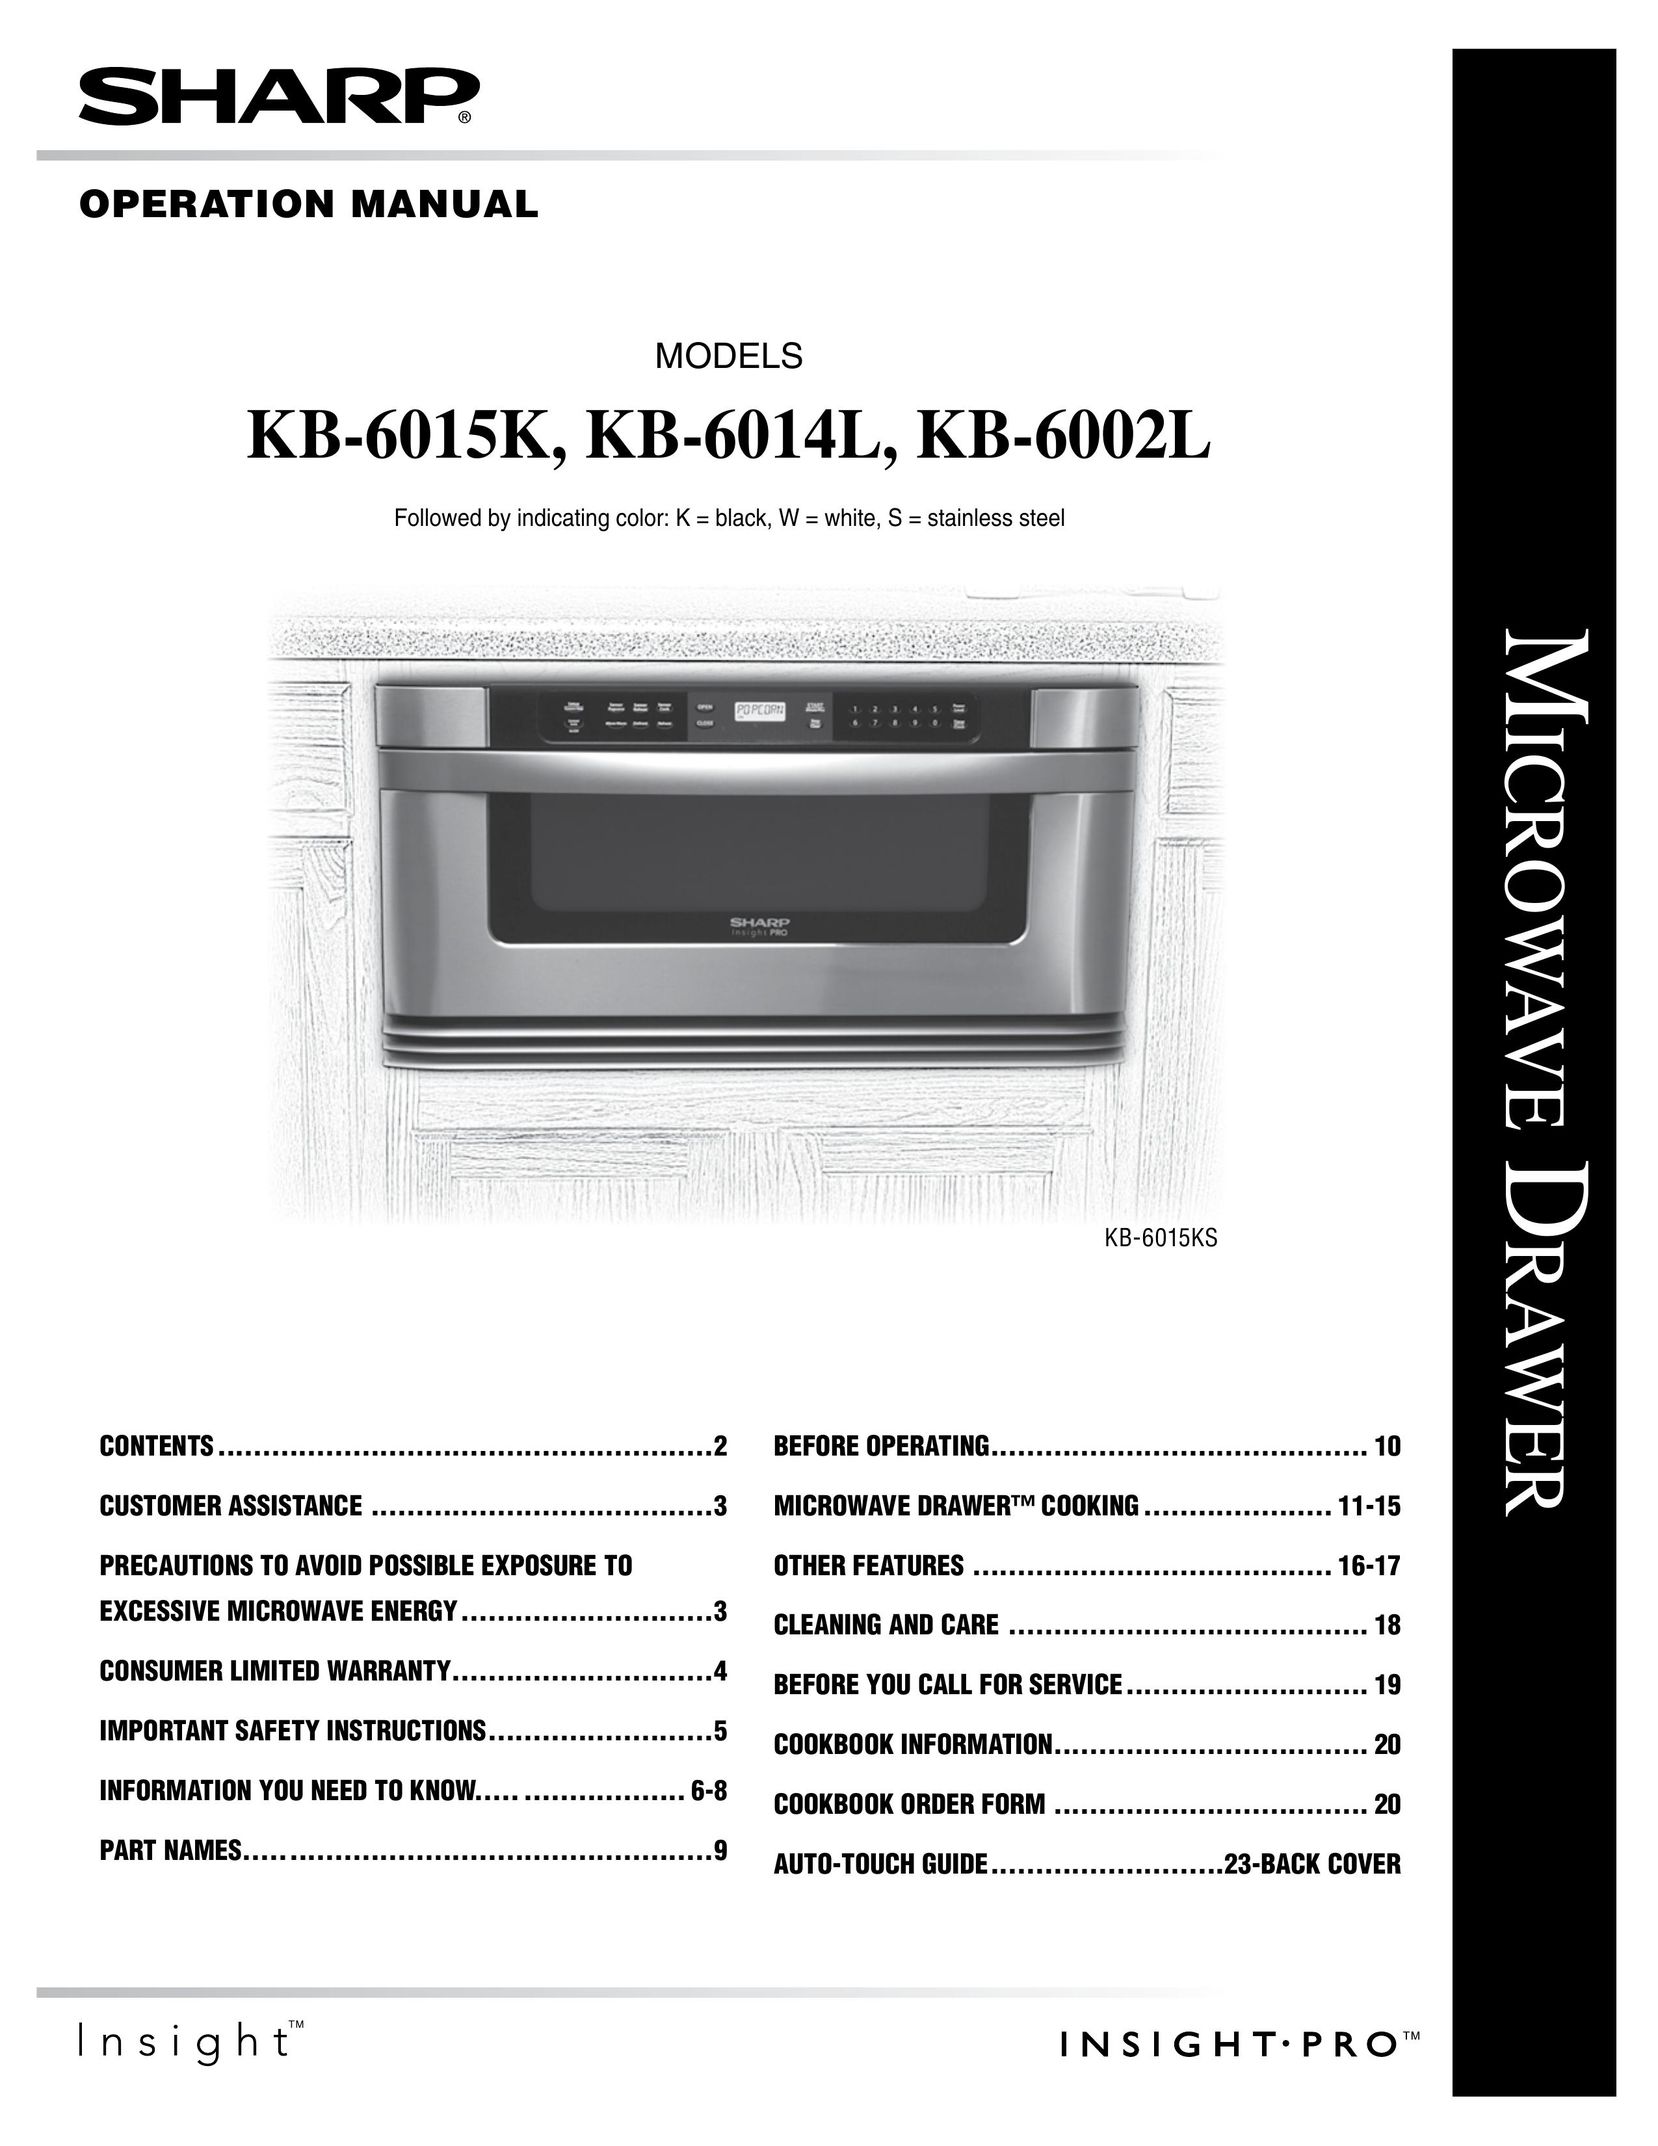 Sharp KB-6002LK Microwave Oven User Manual